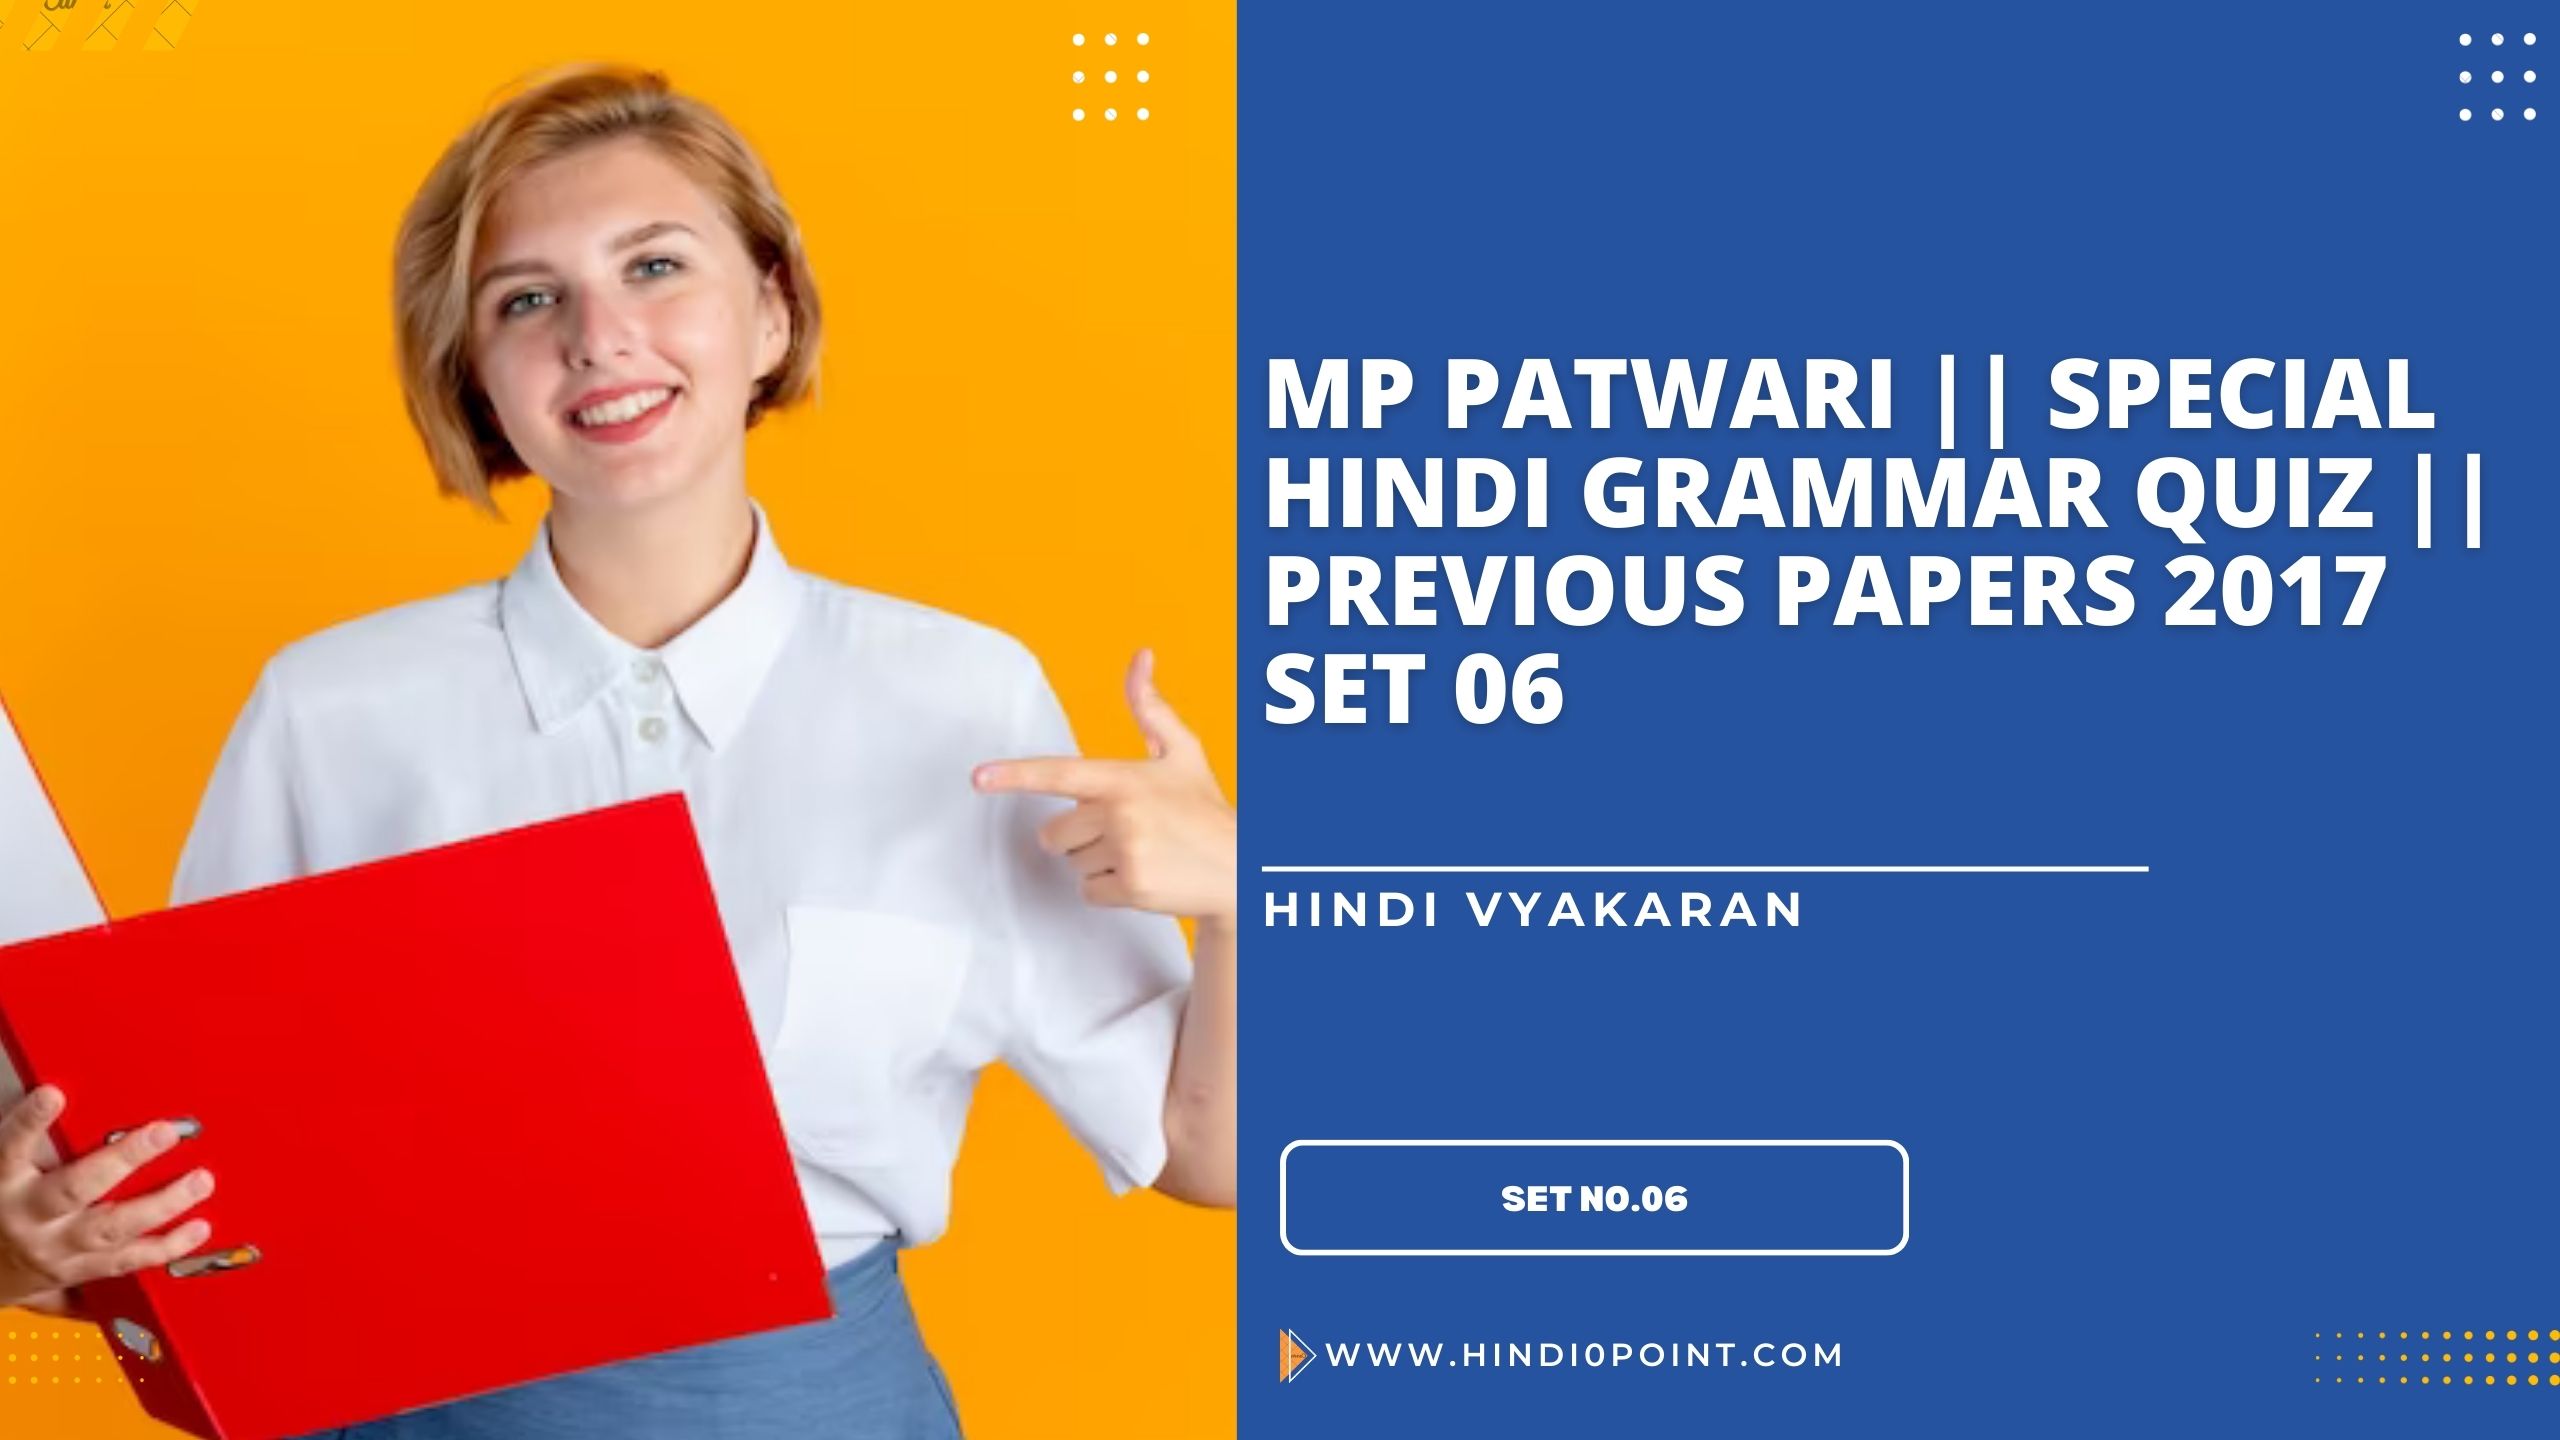 Mp patwari || special hindi grammar quiz || previous papers 2017 set 06